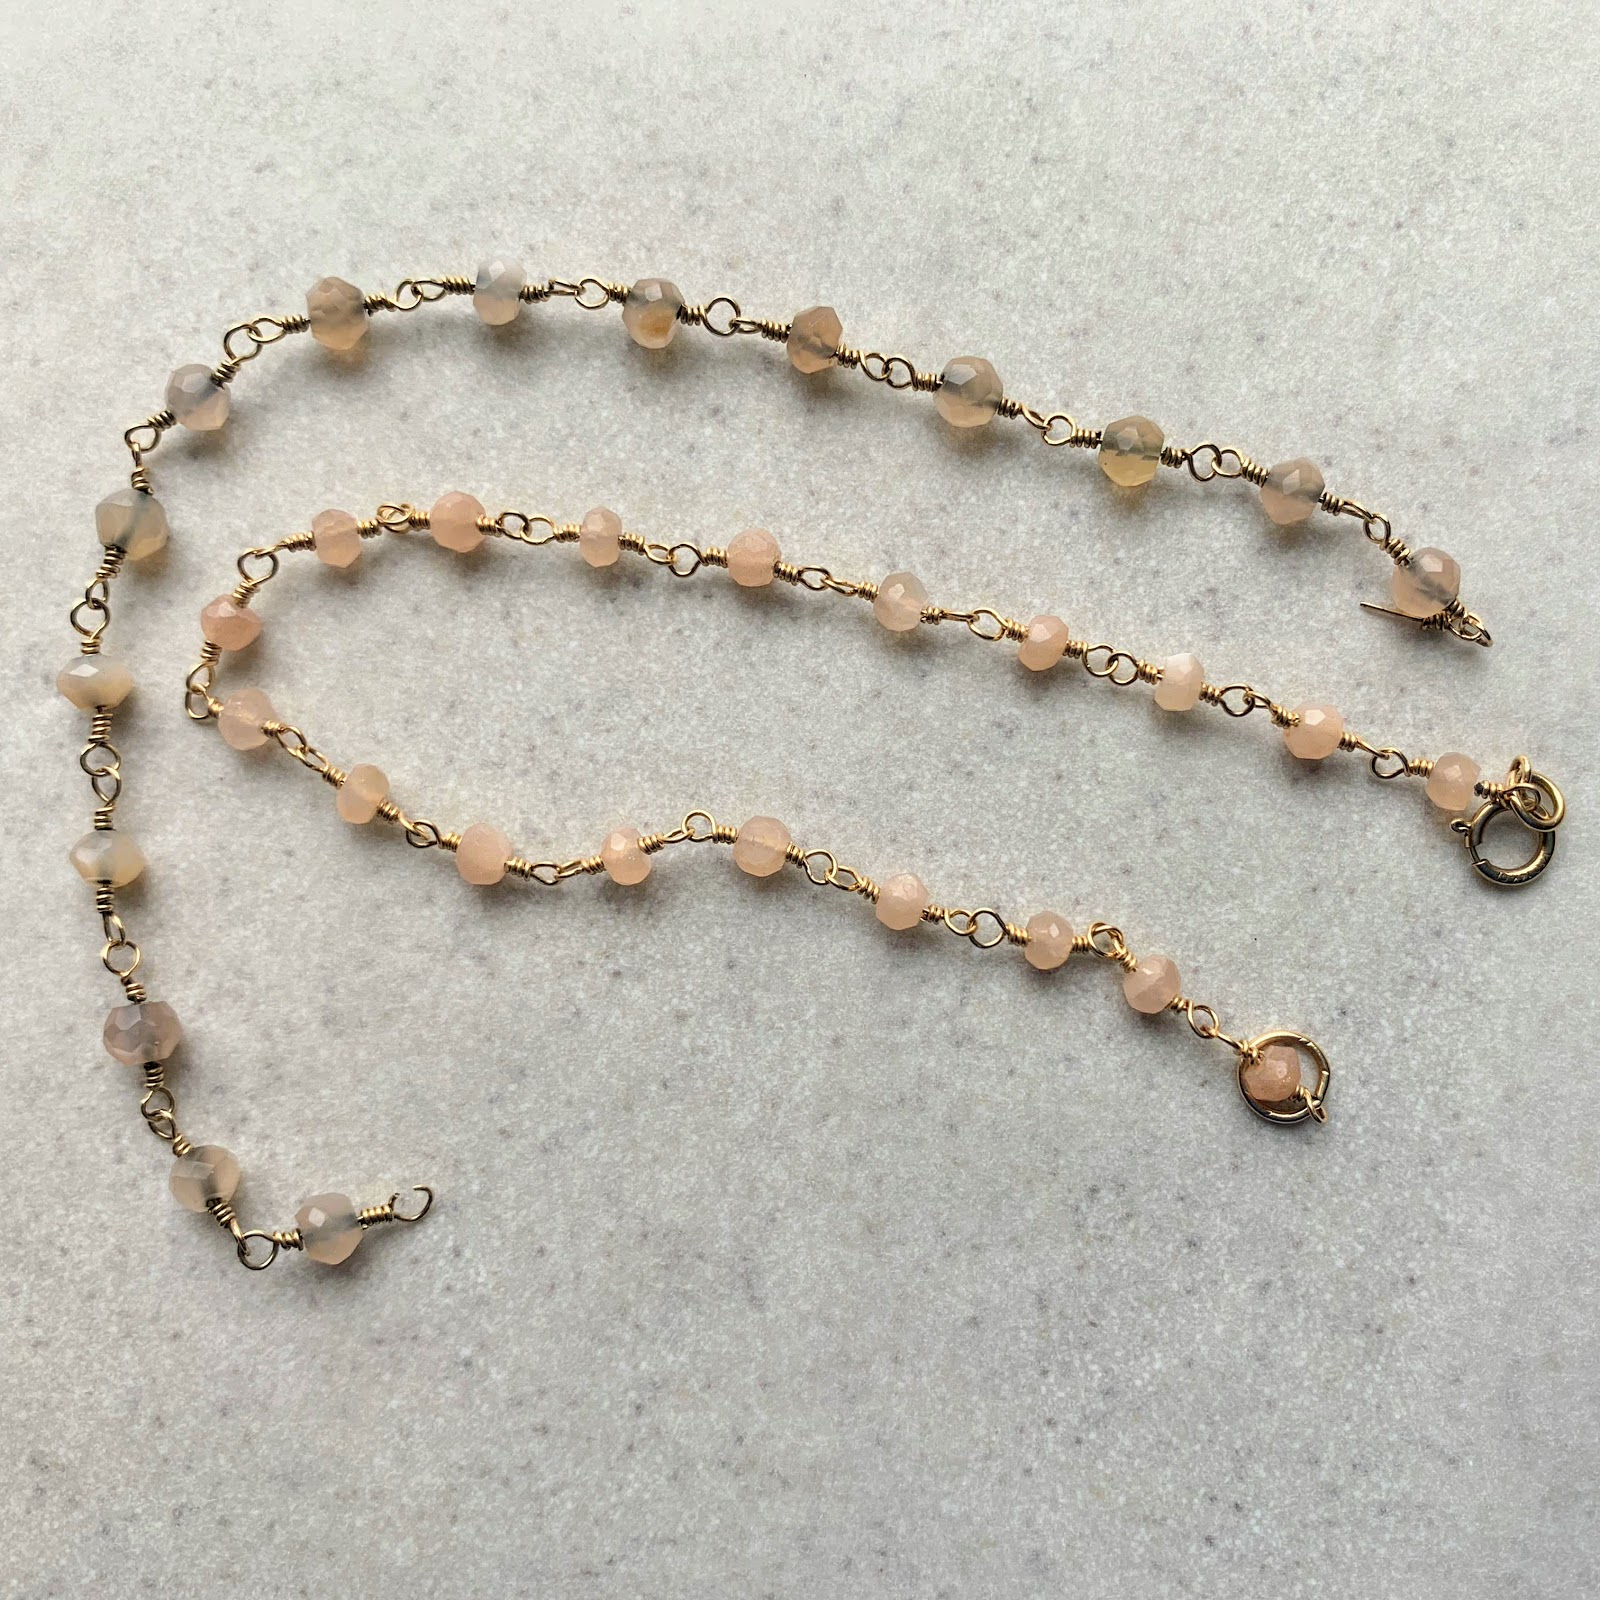 Lisa Yang Jewelry : K.O. Beading Thread Review